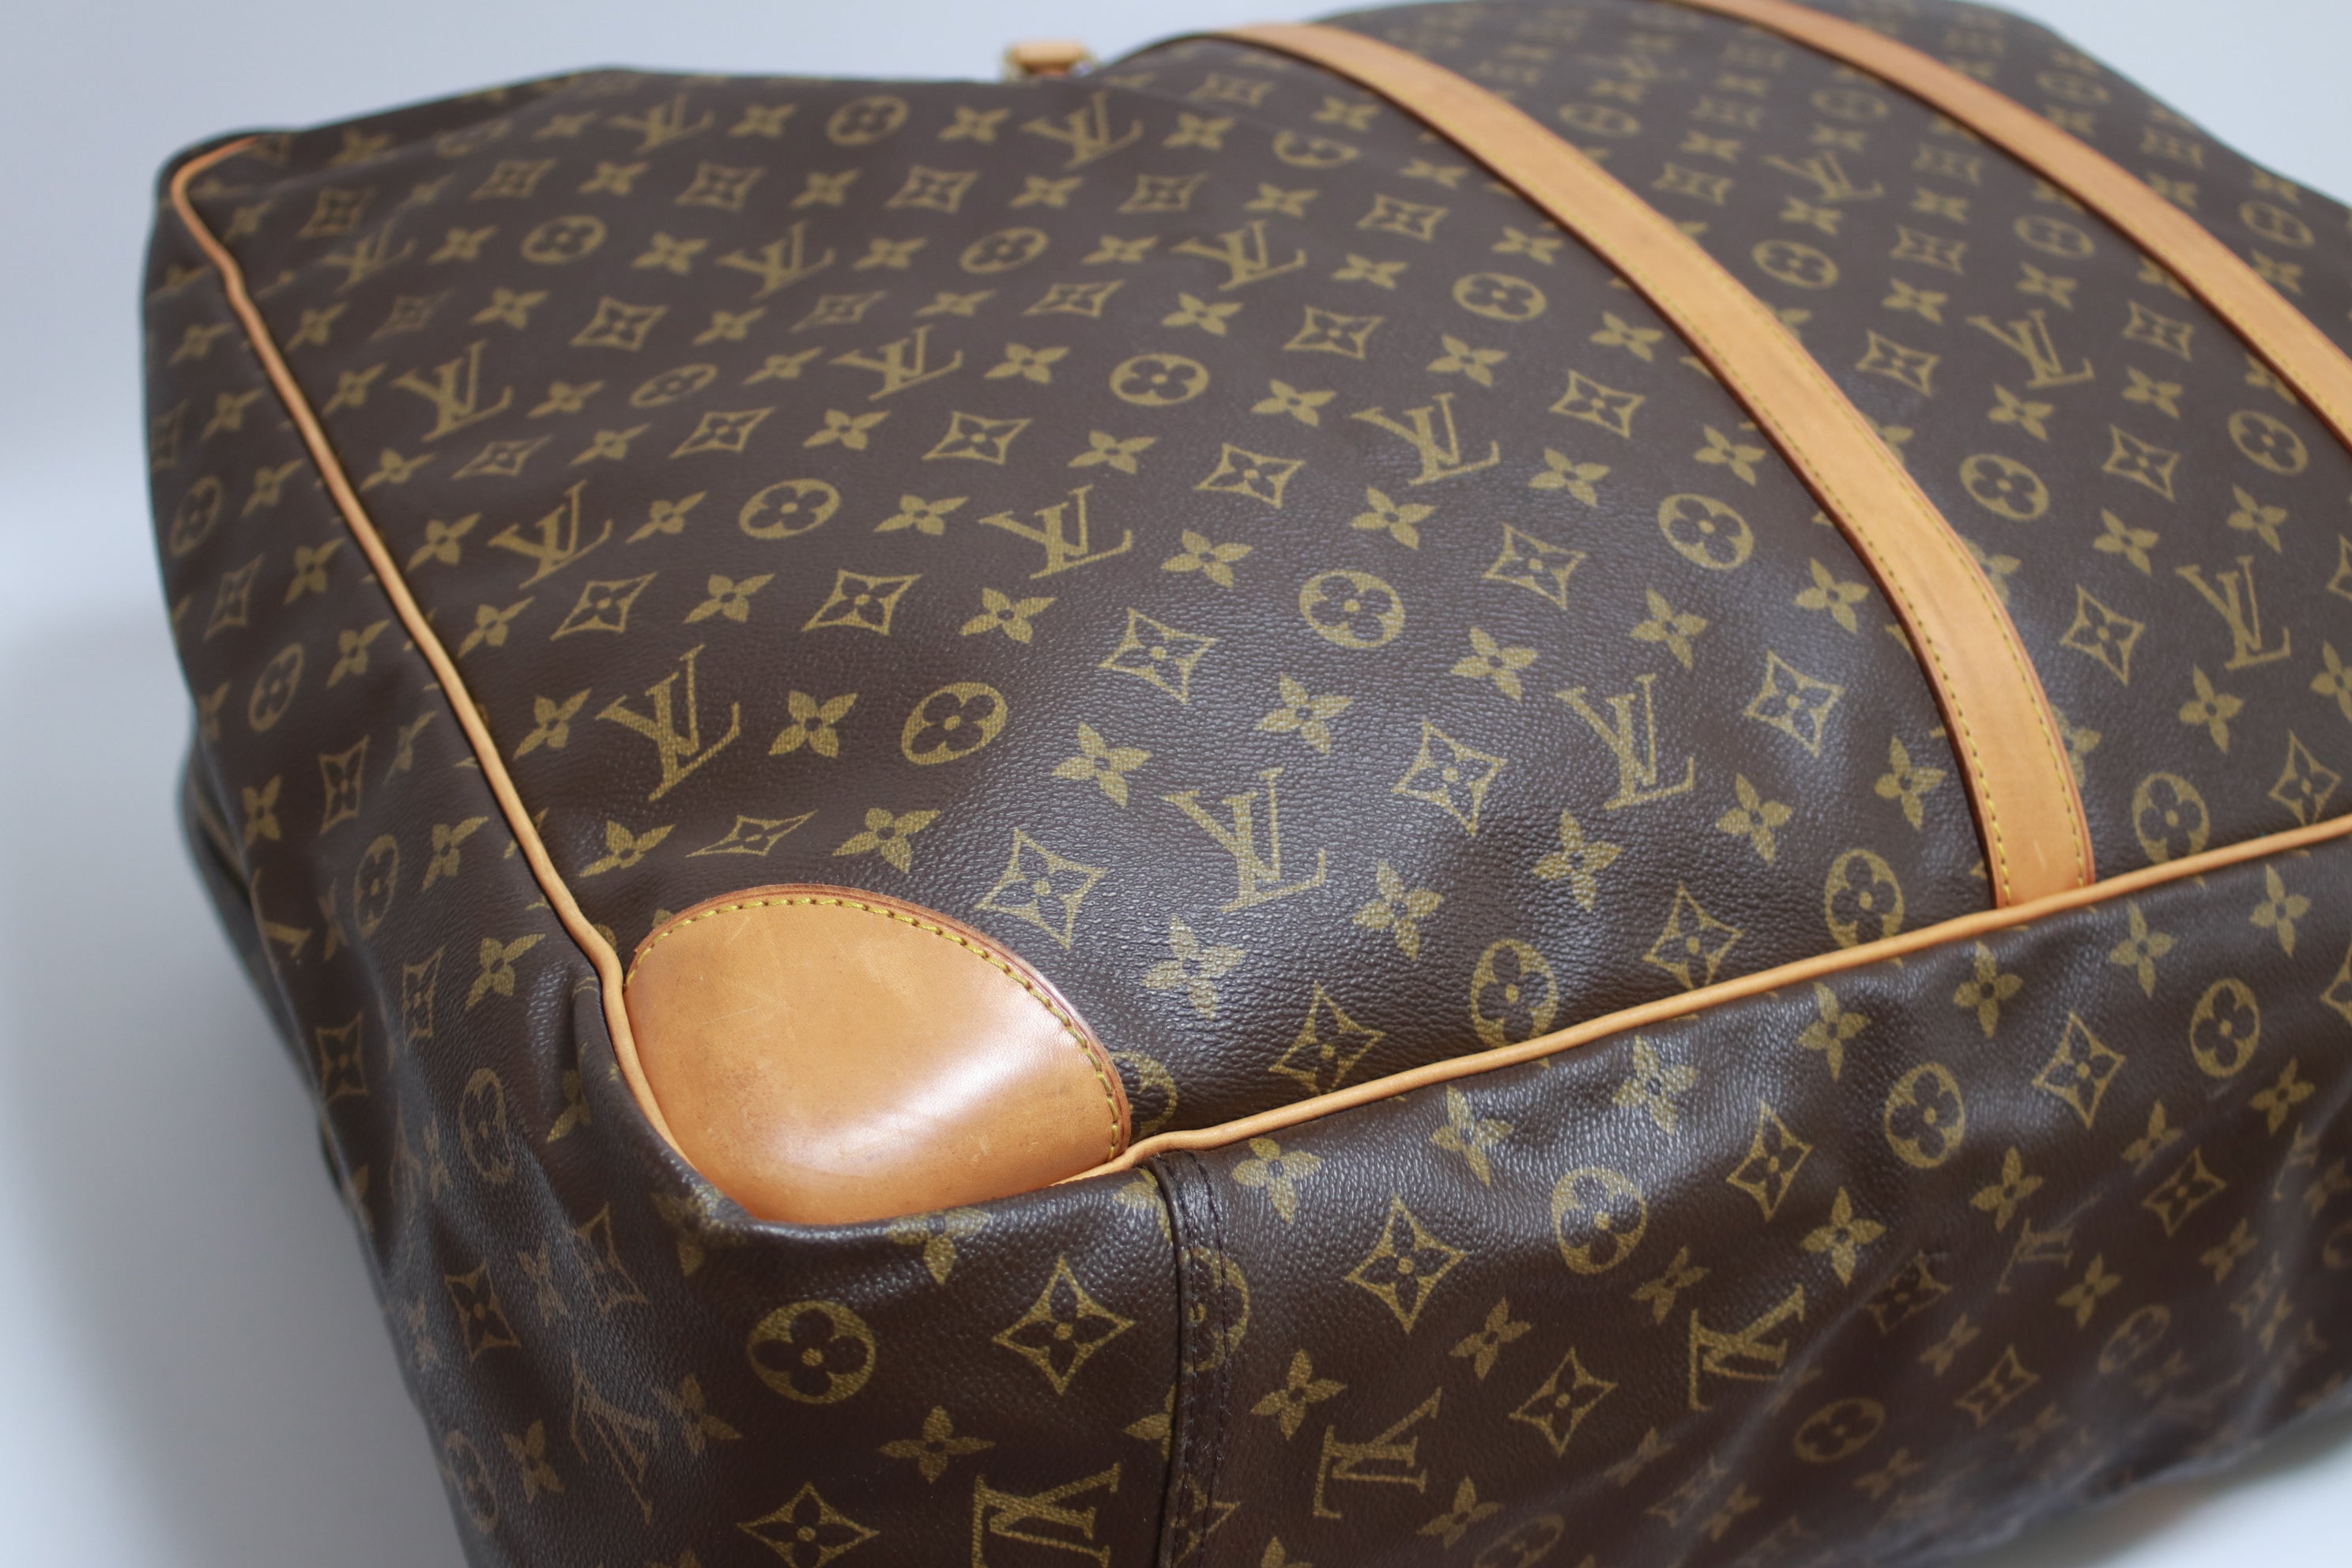 Louis Vuitton Sirius 70 Travel Bag Used (7860)